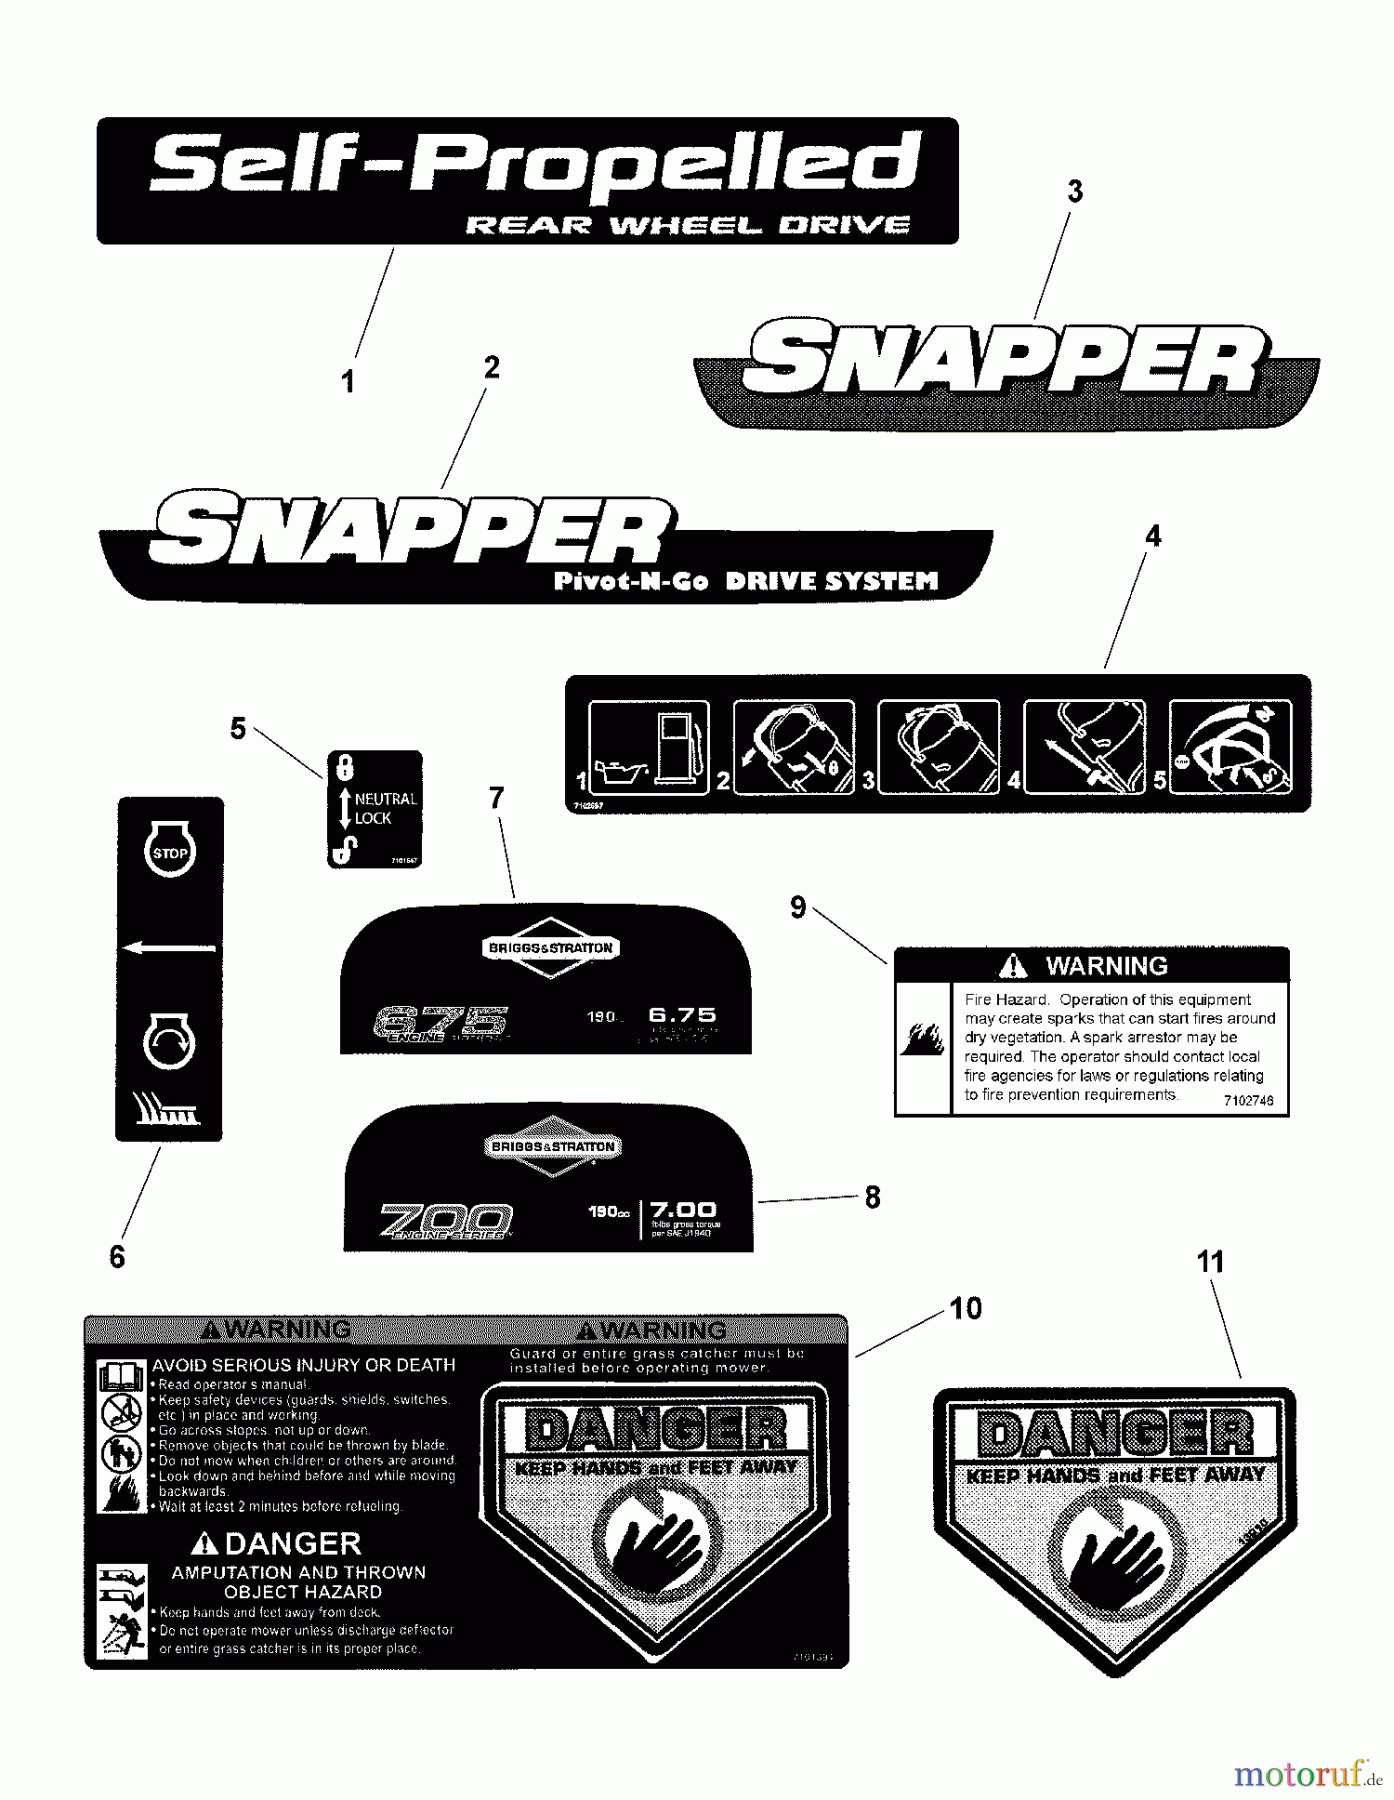  Snapper Rasenmäher SPVH21675 (7800441) - Snapper 21